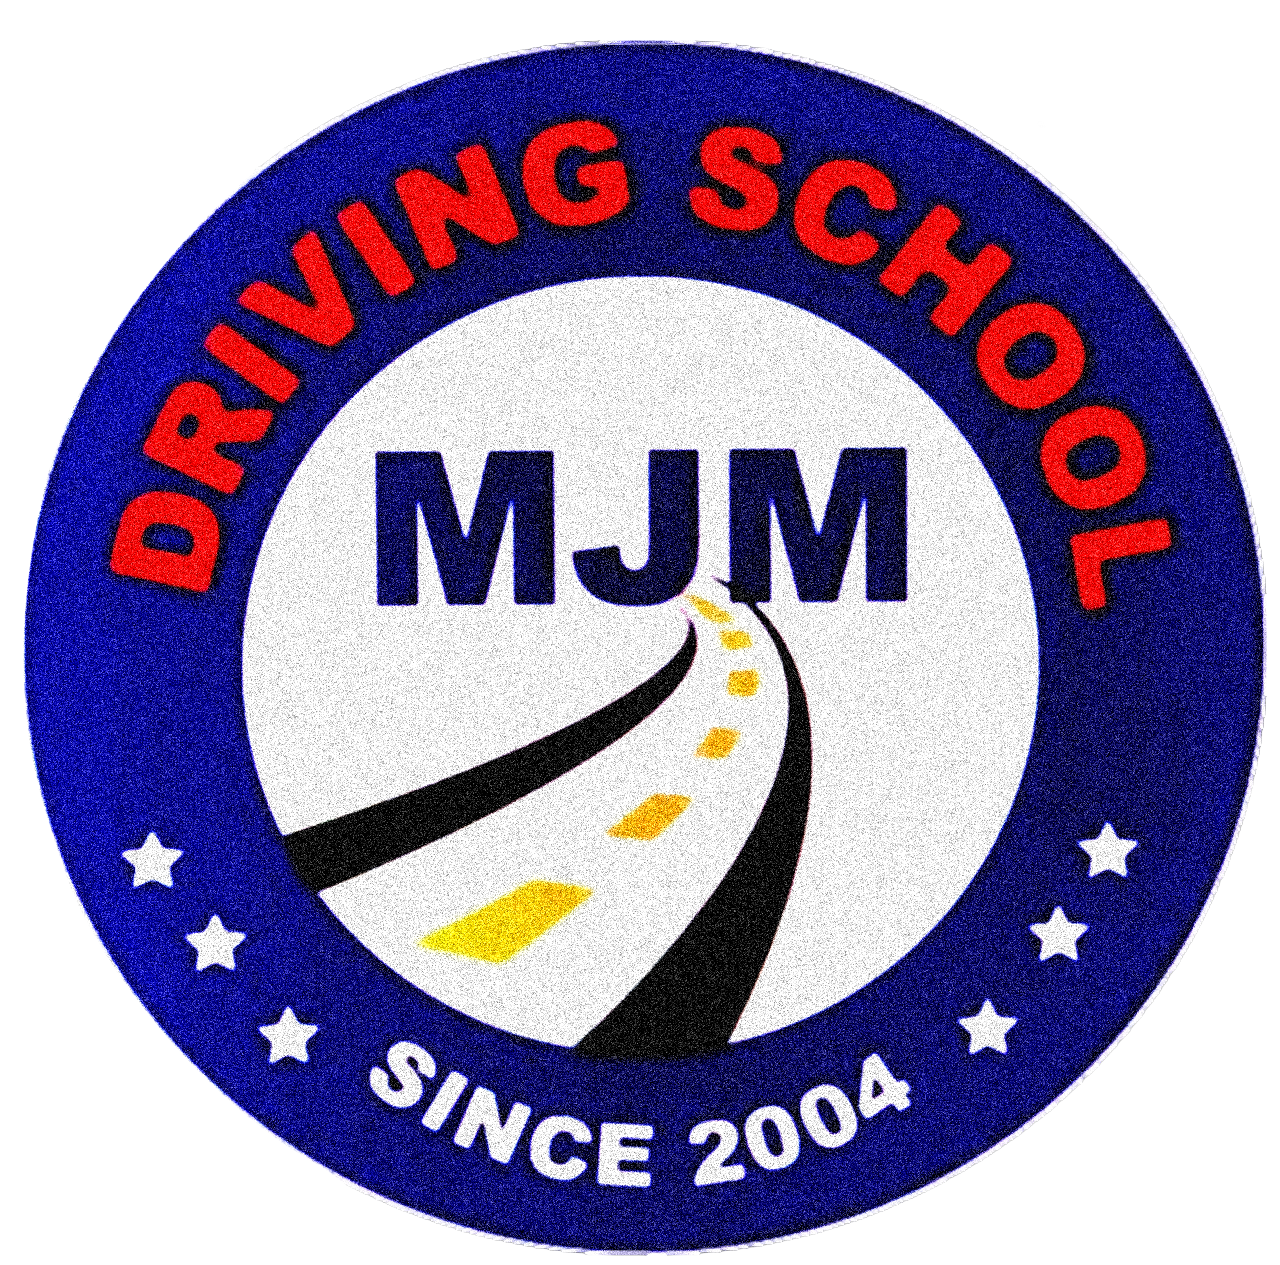 MJM Driving School